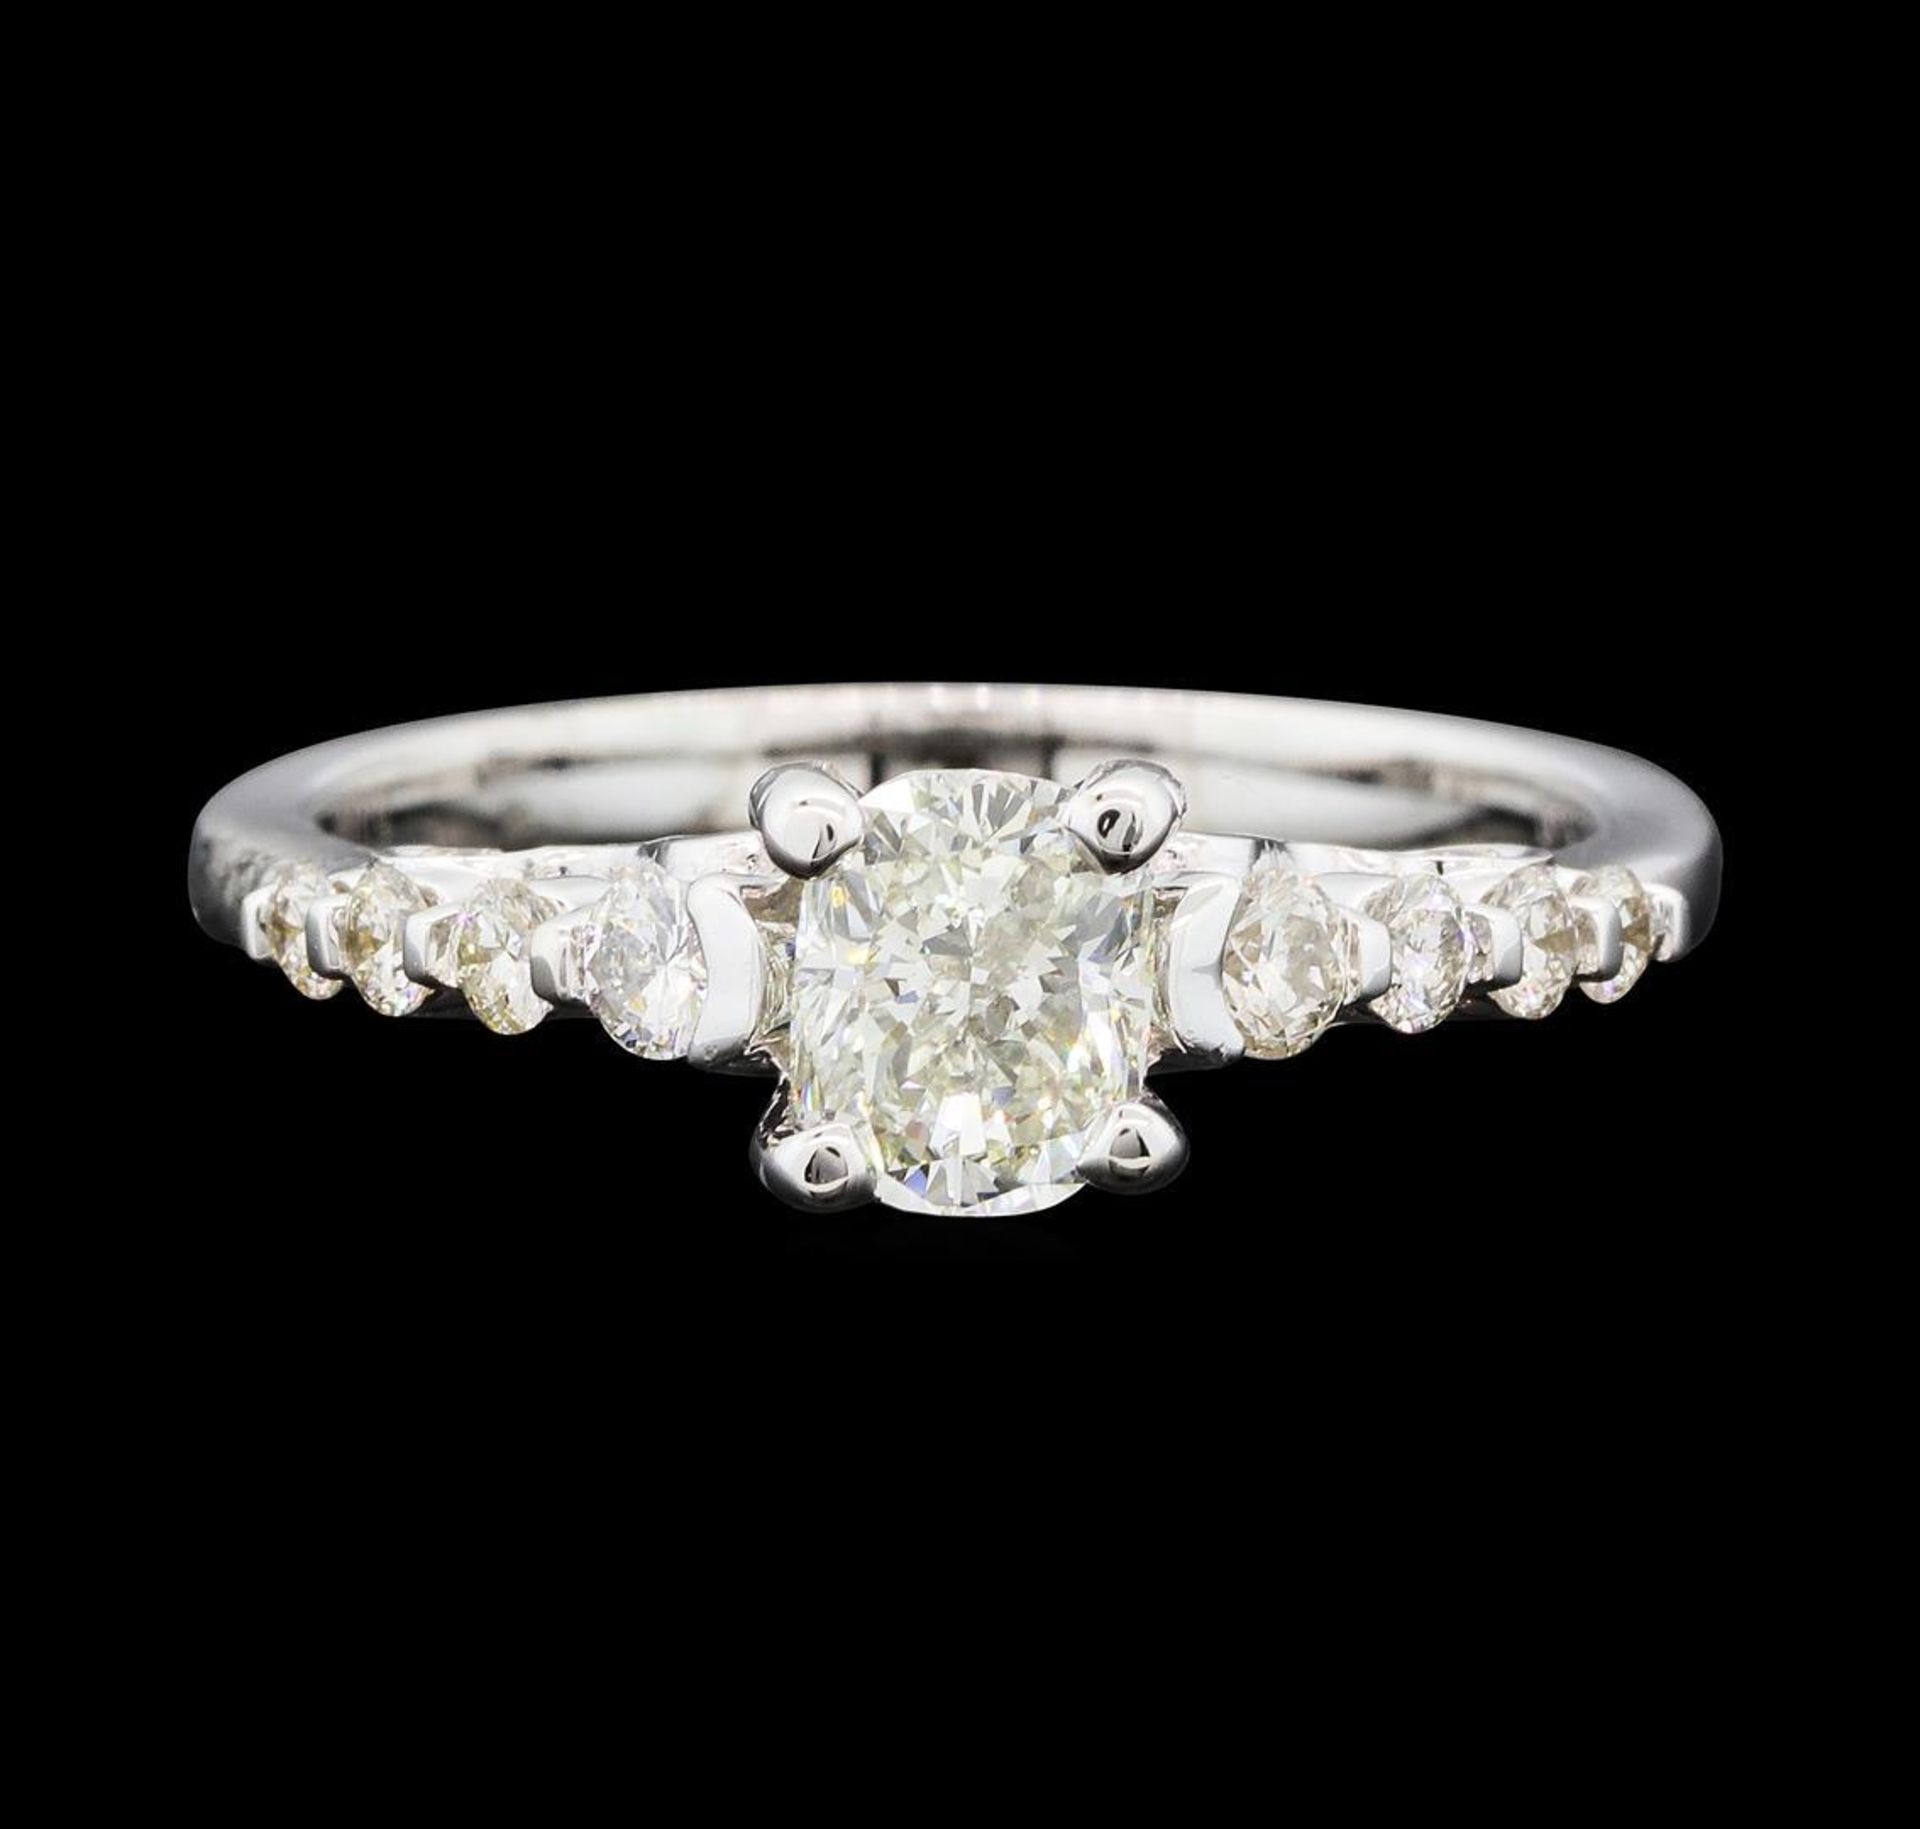 1.12 ctw Diamond Ring - 14KT White Gold - Image 2 of 5